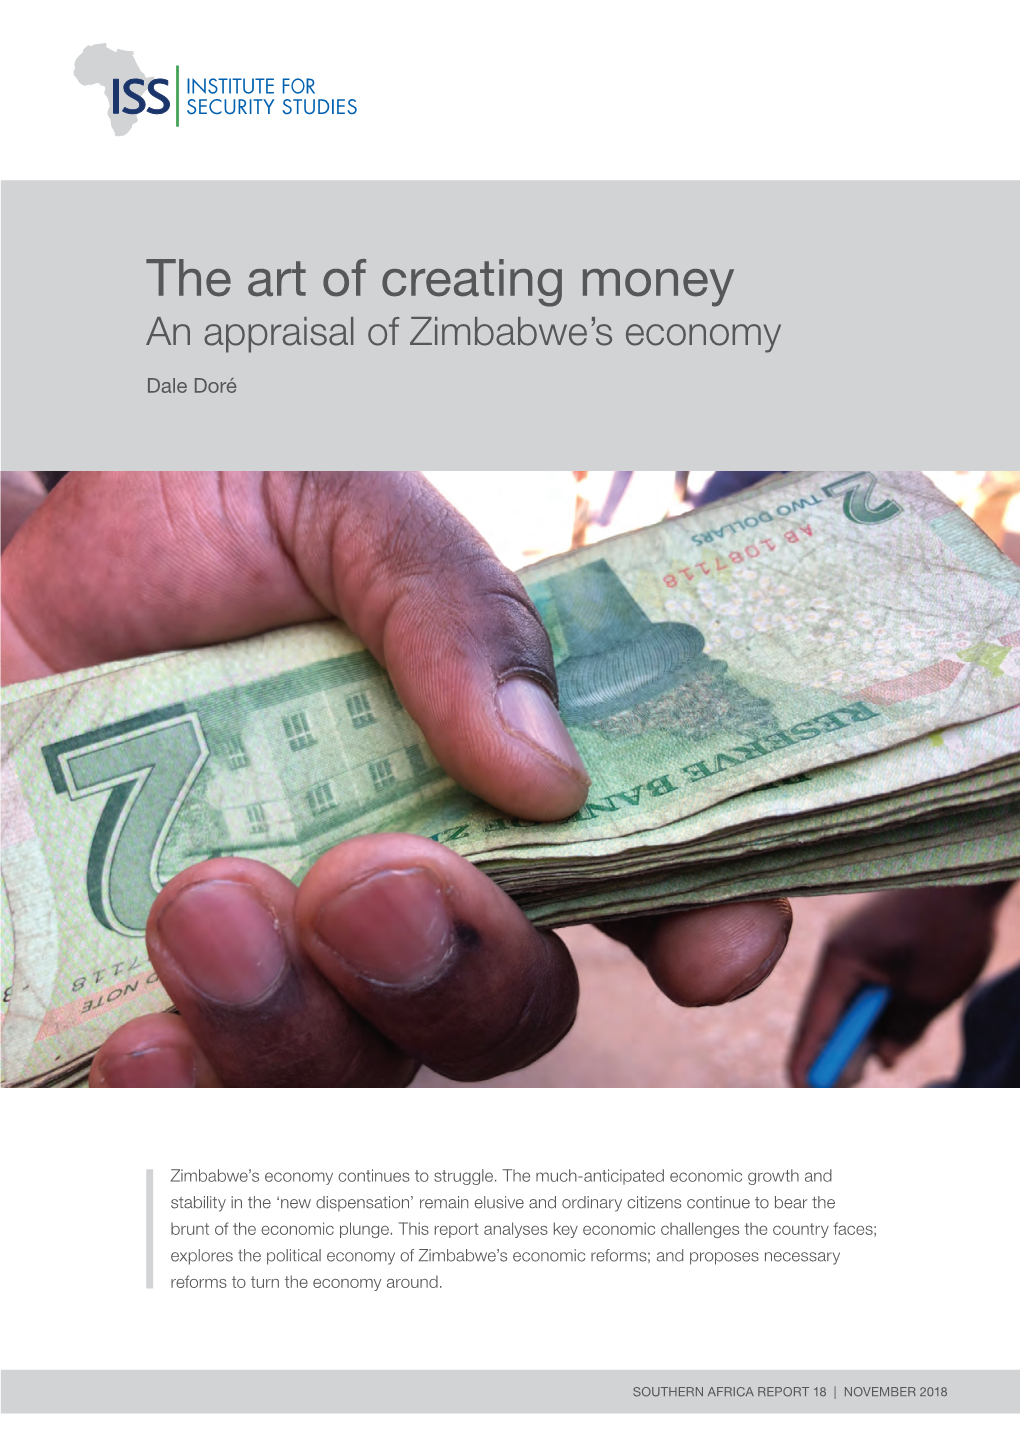 The Art of Creating Money: an Appraisal of Zimbabwe's Economy